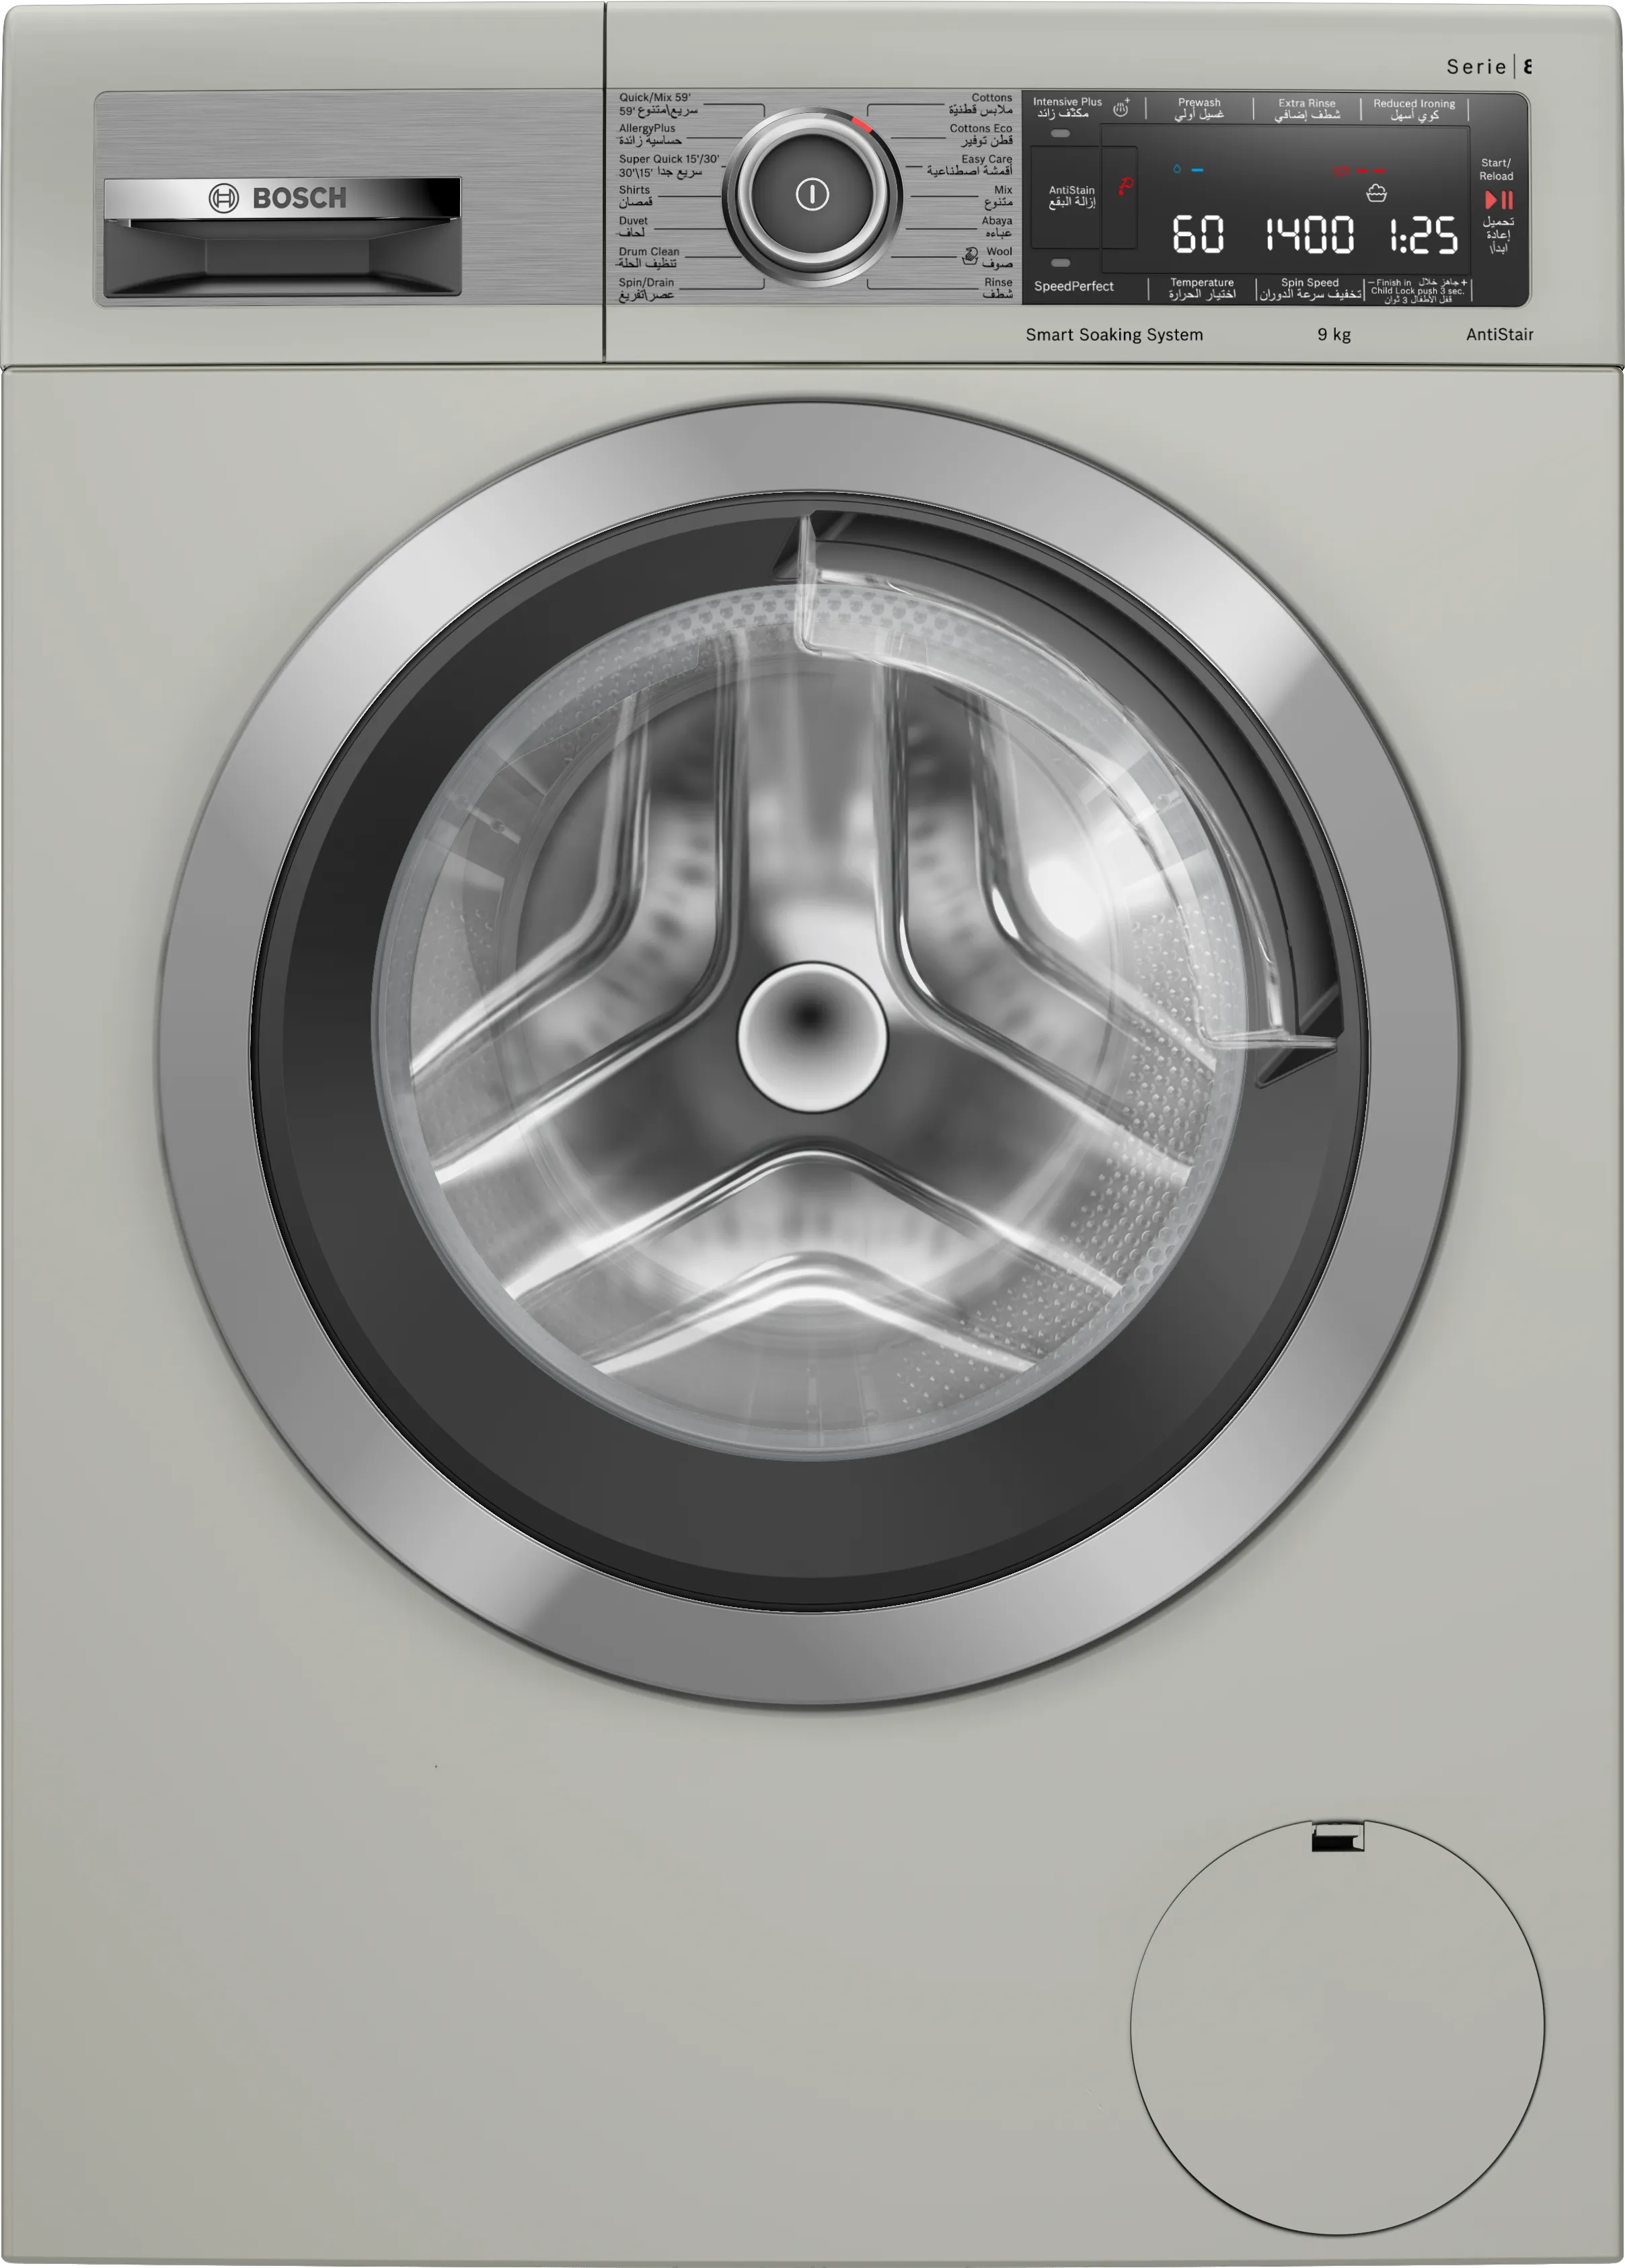 Series 8 washing machine, front loader 9 kg , Silver inox 